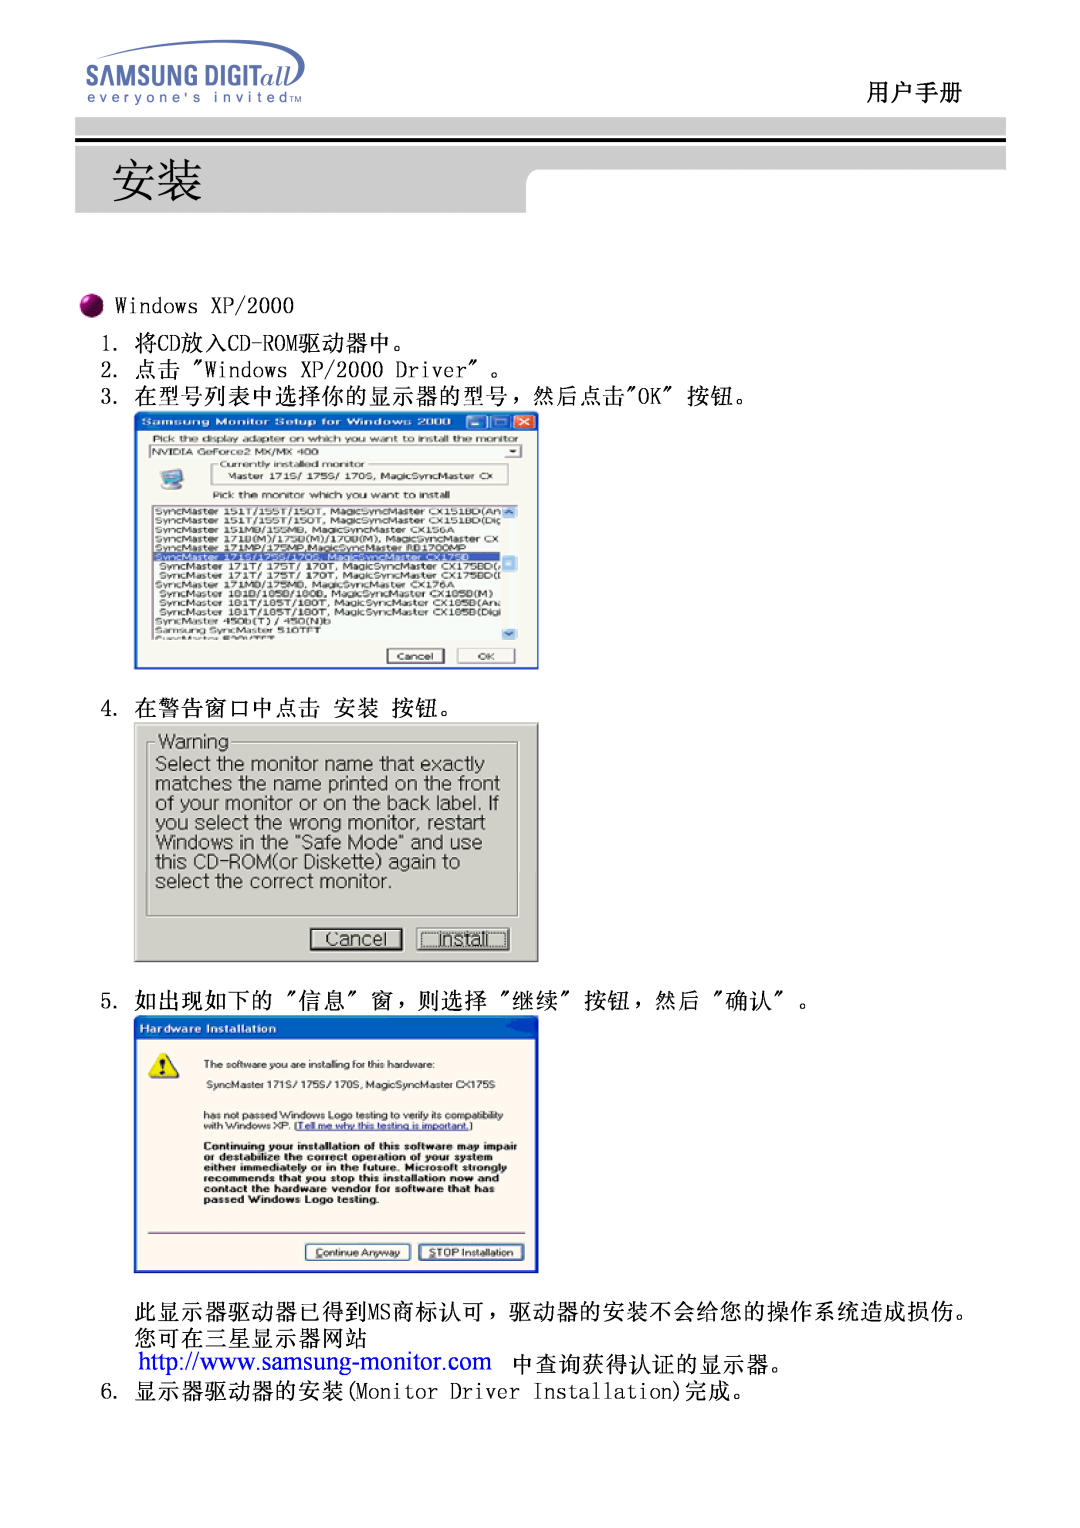 Samsung MO17ESDS/EDC, MO17ESZSZ/EDC manual 1. CD, Windows XP/2000 Driver 3.OK, Monitor Driver Installation, Cd-Rom 